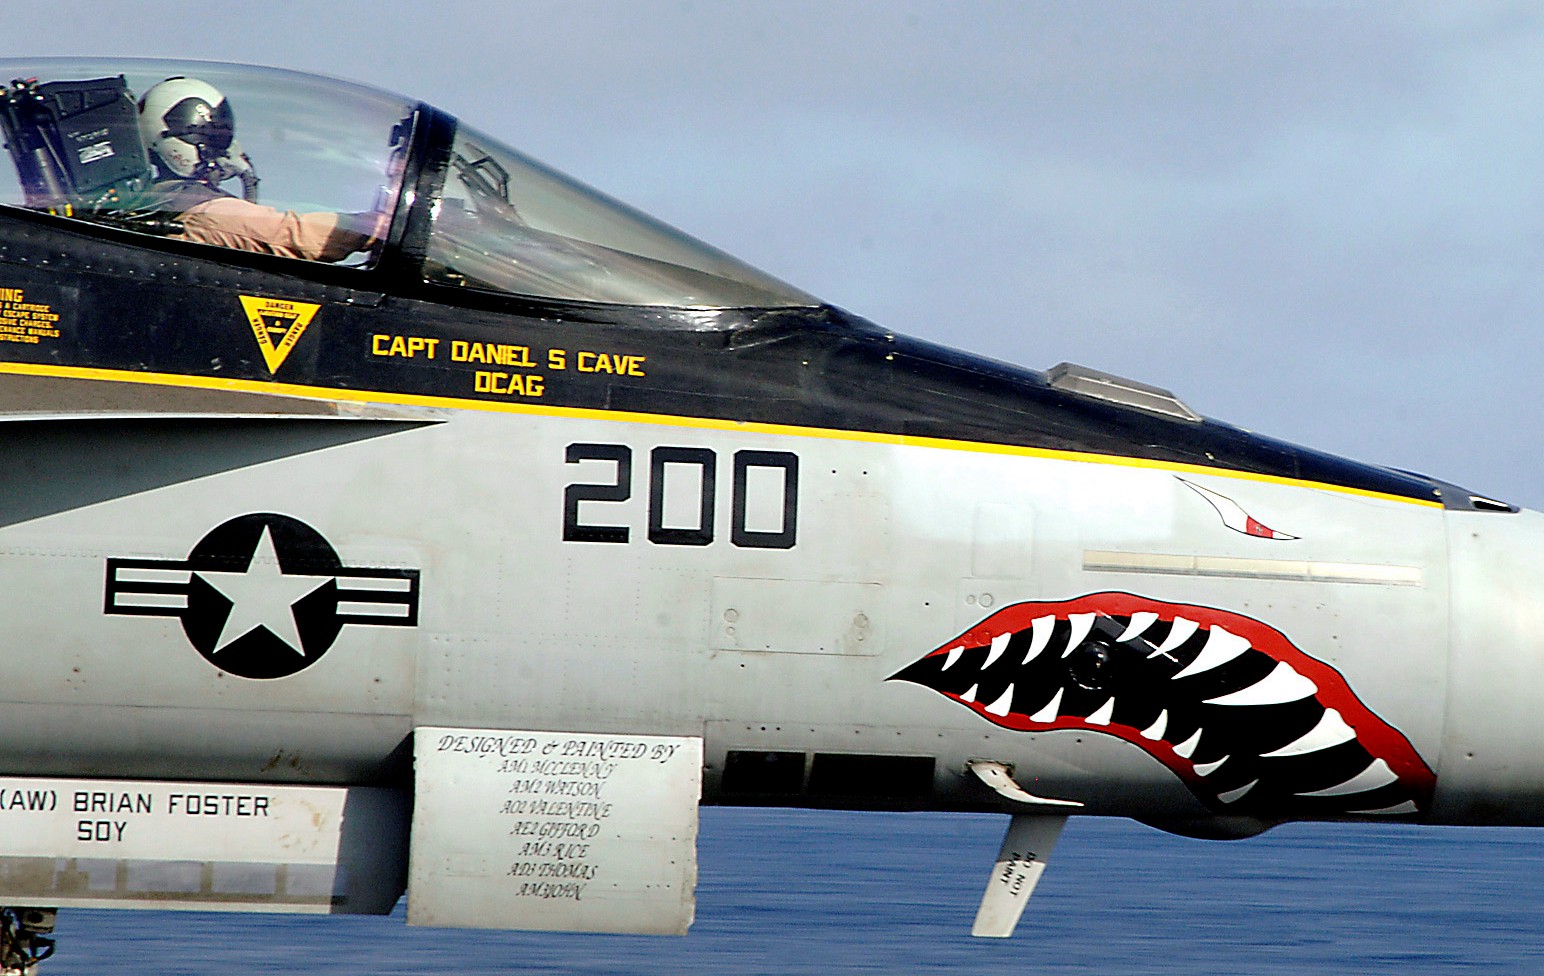 vfa-27 royal maces strike fighter squadron f/a-18e super hornet cvn-73 uss george washington cvw-5 us navy 131p